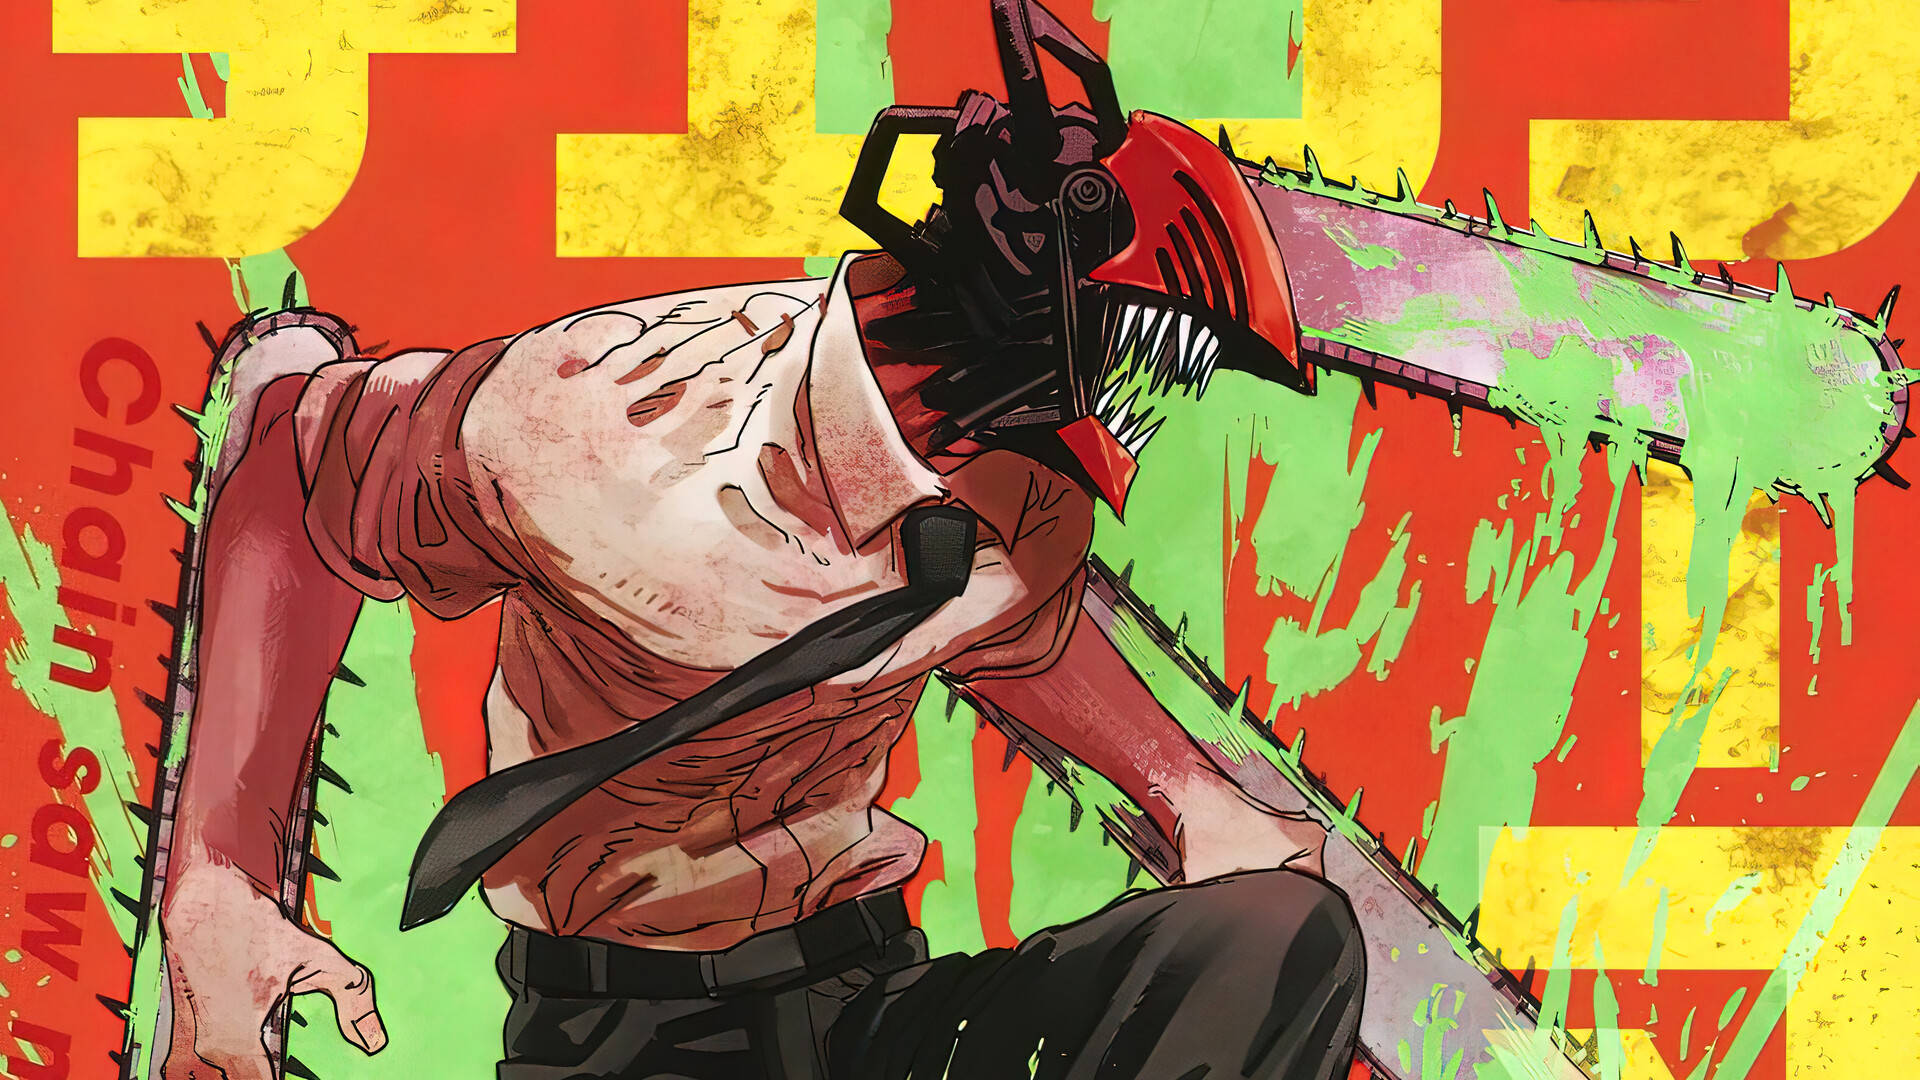 Download All Anime Chainsaw Man Denji Wallpaper